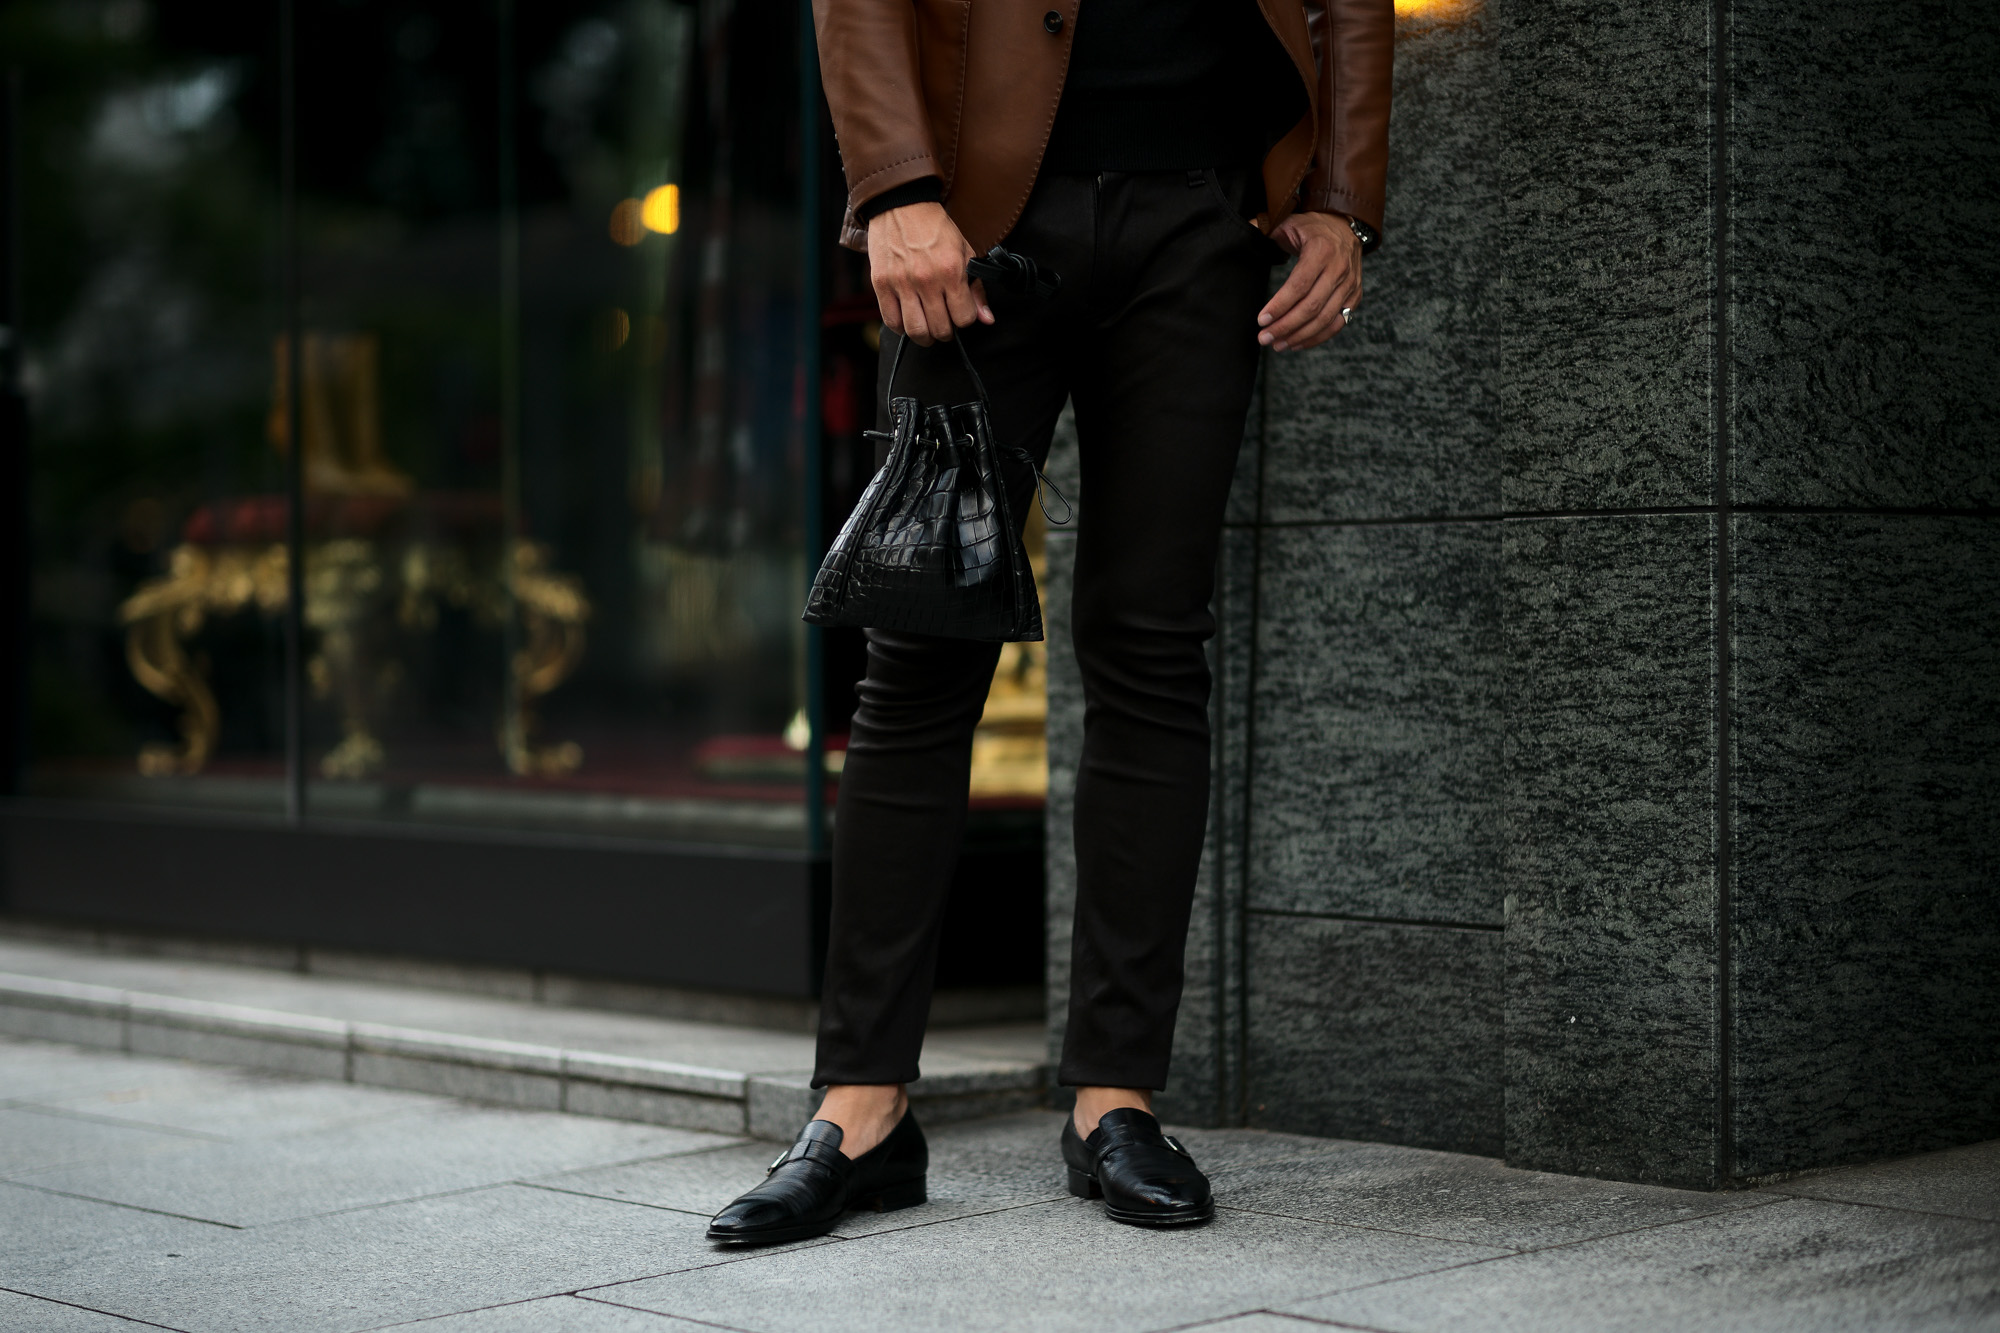 cuervo bopoha(クエルボ ヴァローナ) FLOYD(フロイド) Crocodile Leather(クロコダイルレザー) レザードローストリングバック 巾着 BLACK (ブラック) Made in Japan(日本製) 2020【Special Model】 愛知 名古屋 altoediritto アルトエデリット